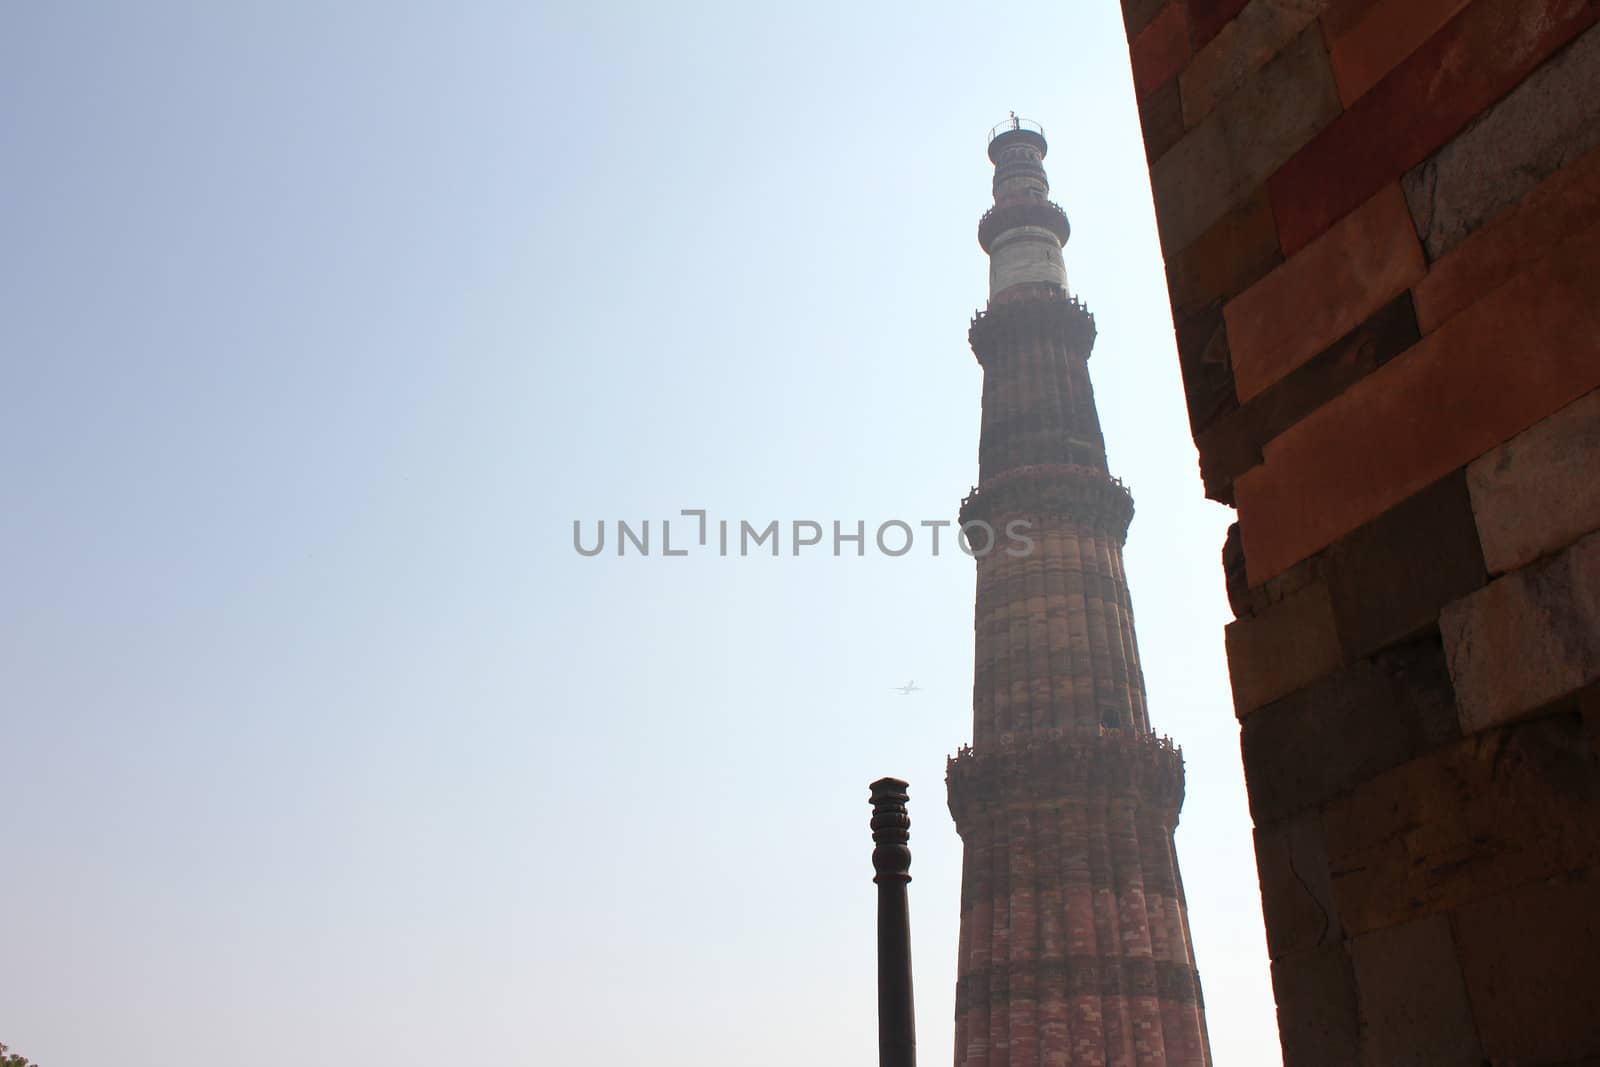 qutub minar with iron pillars in blue sky
